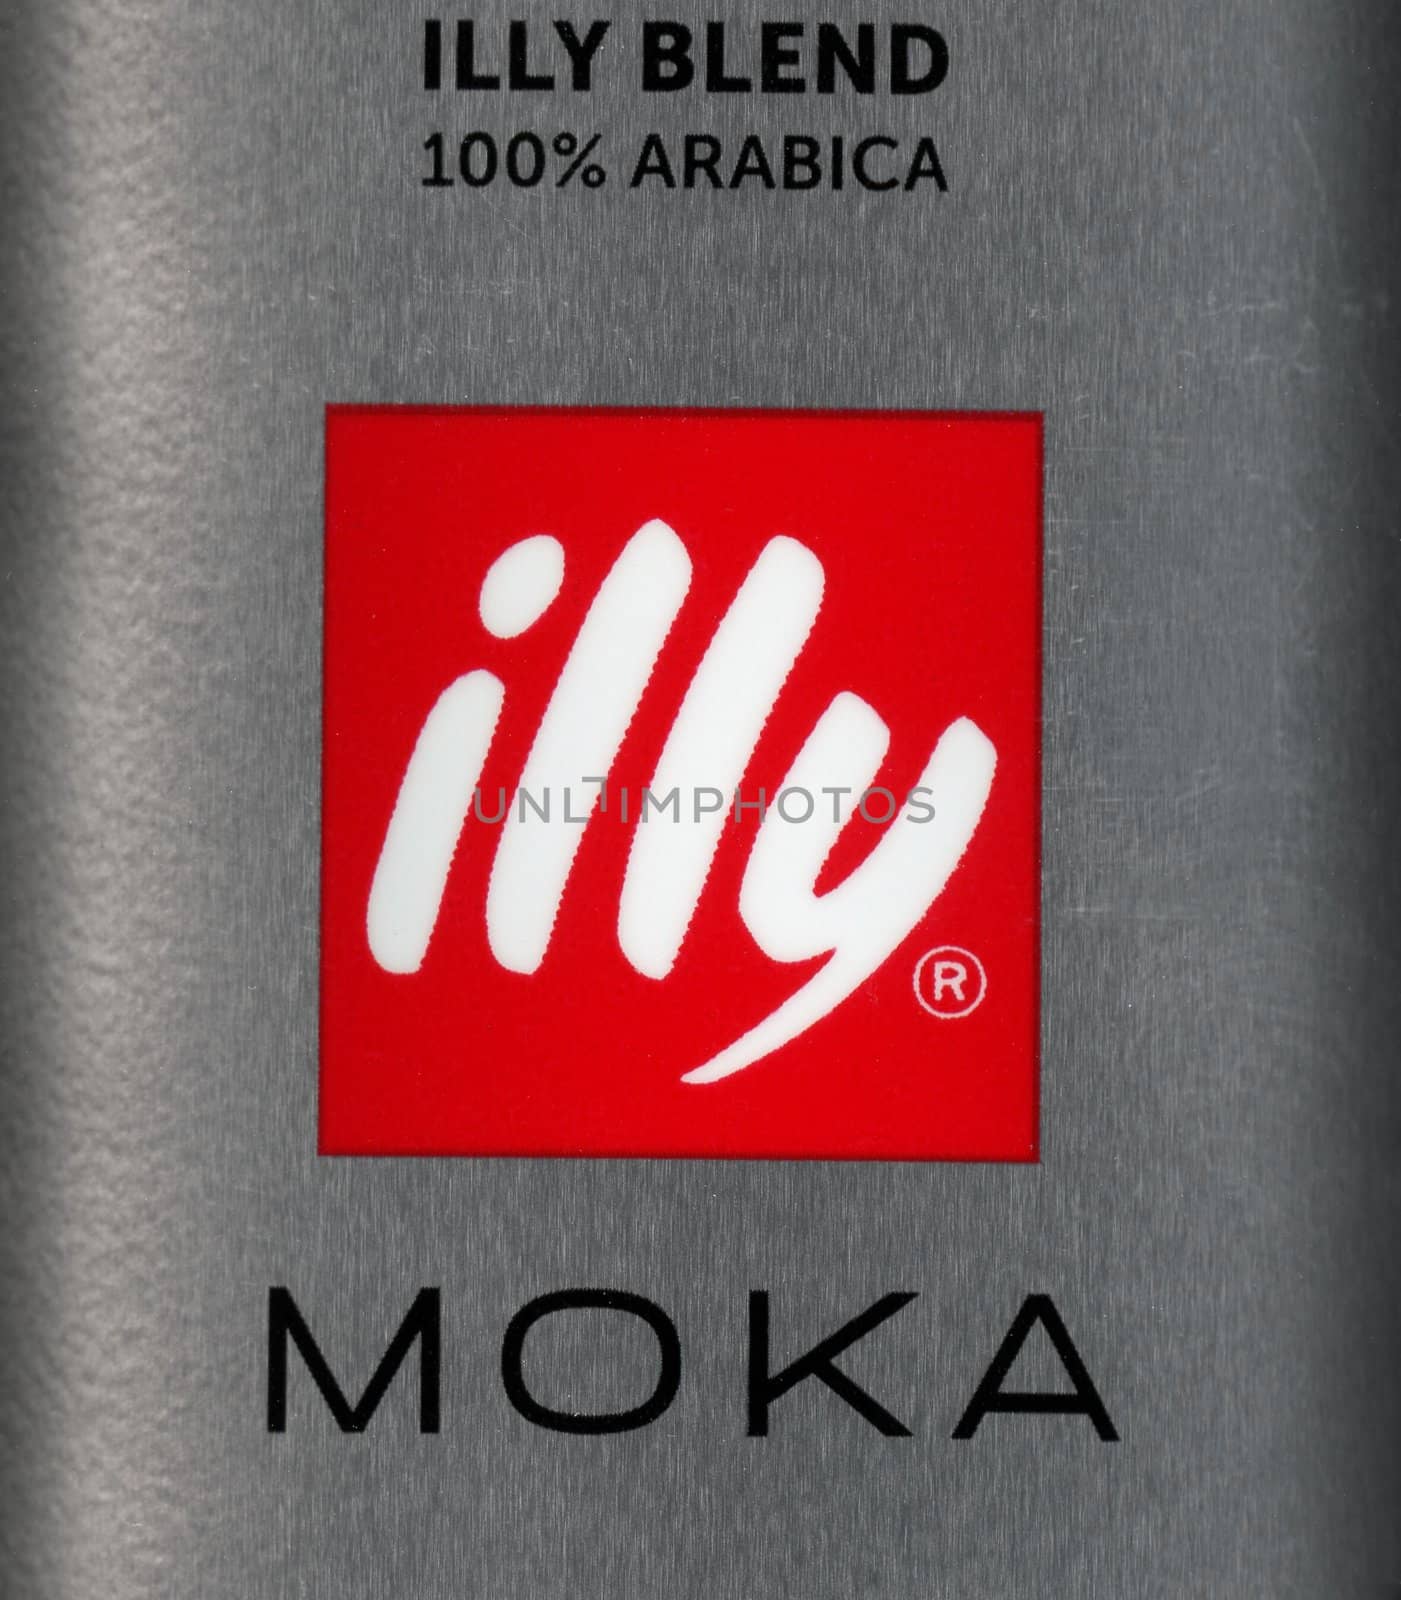 MILAN, ITALY - CIRCA DECEMBER 2018: Moka Illy blend 100 percent arabica coffee